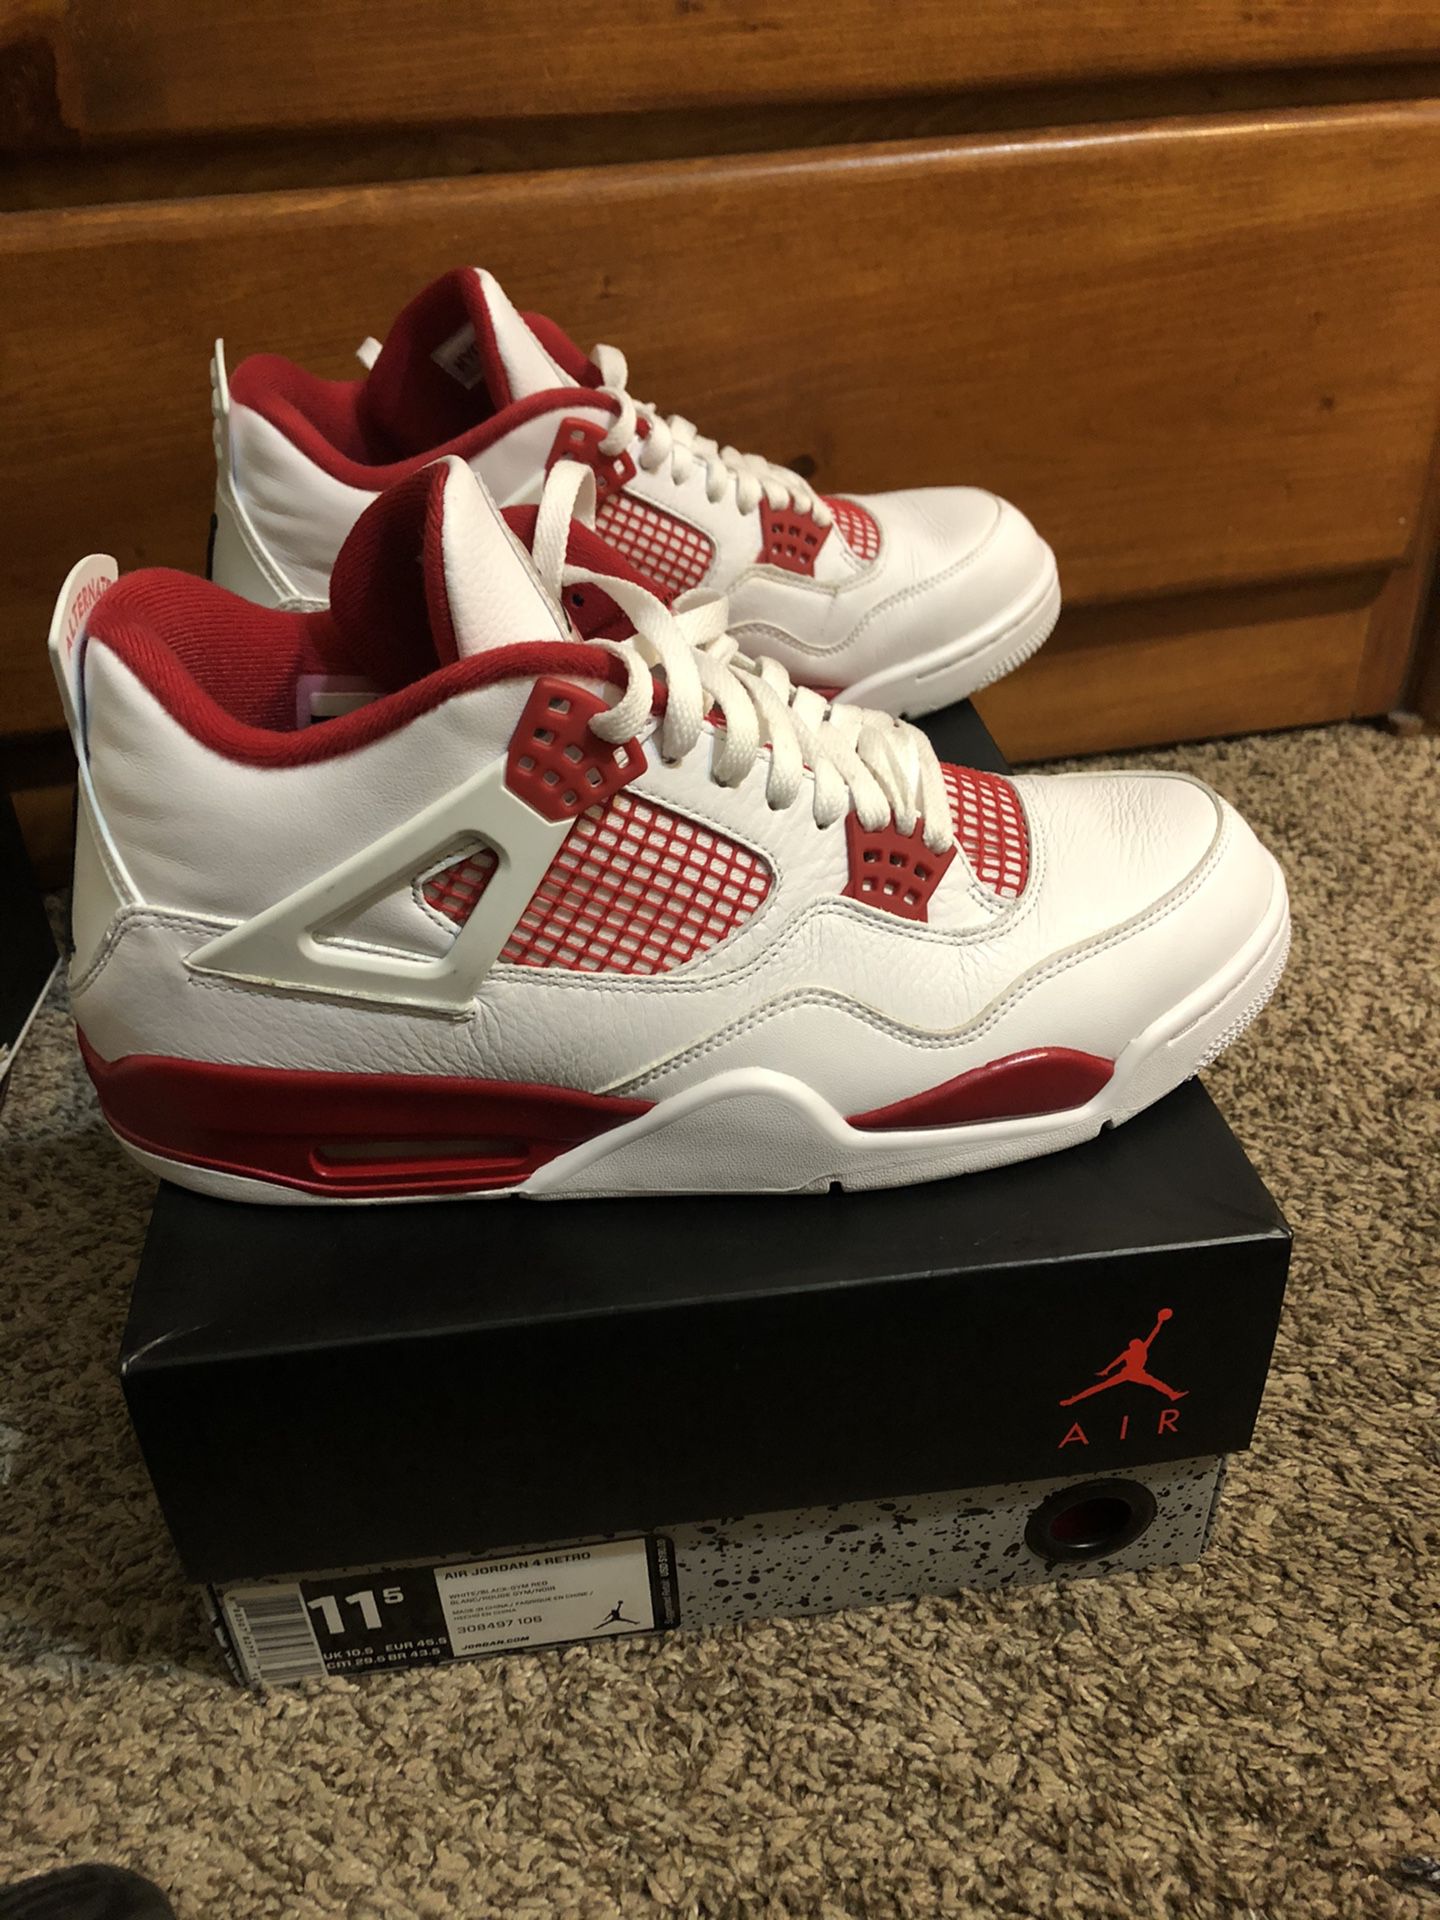 Air Jordan Retro 4 Size 11.5